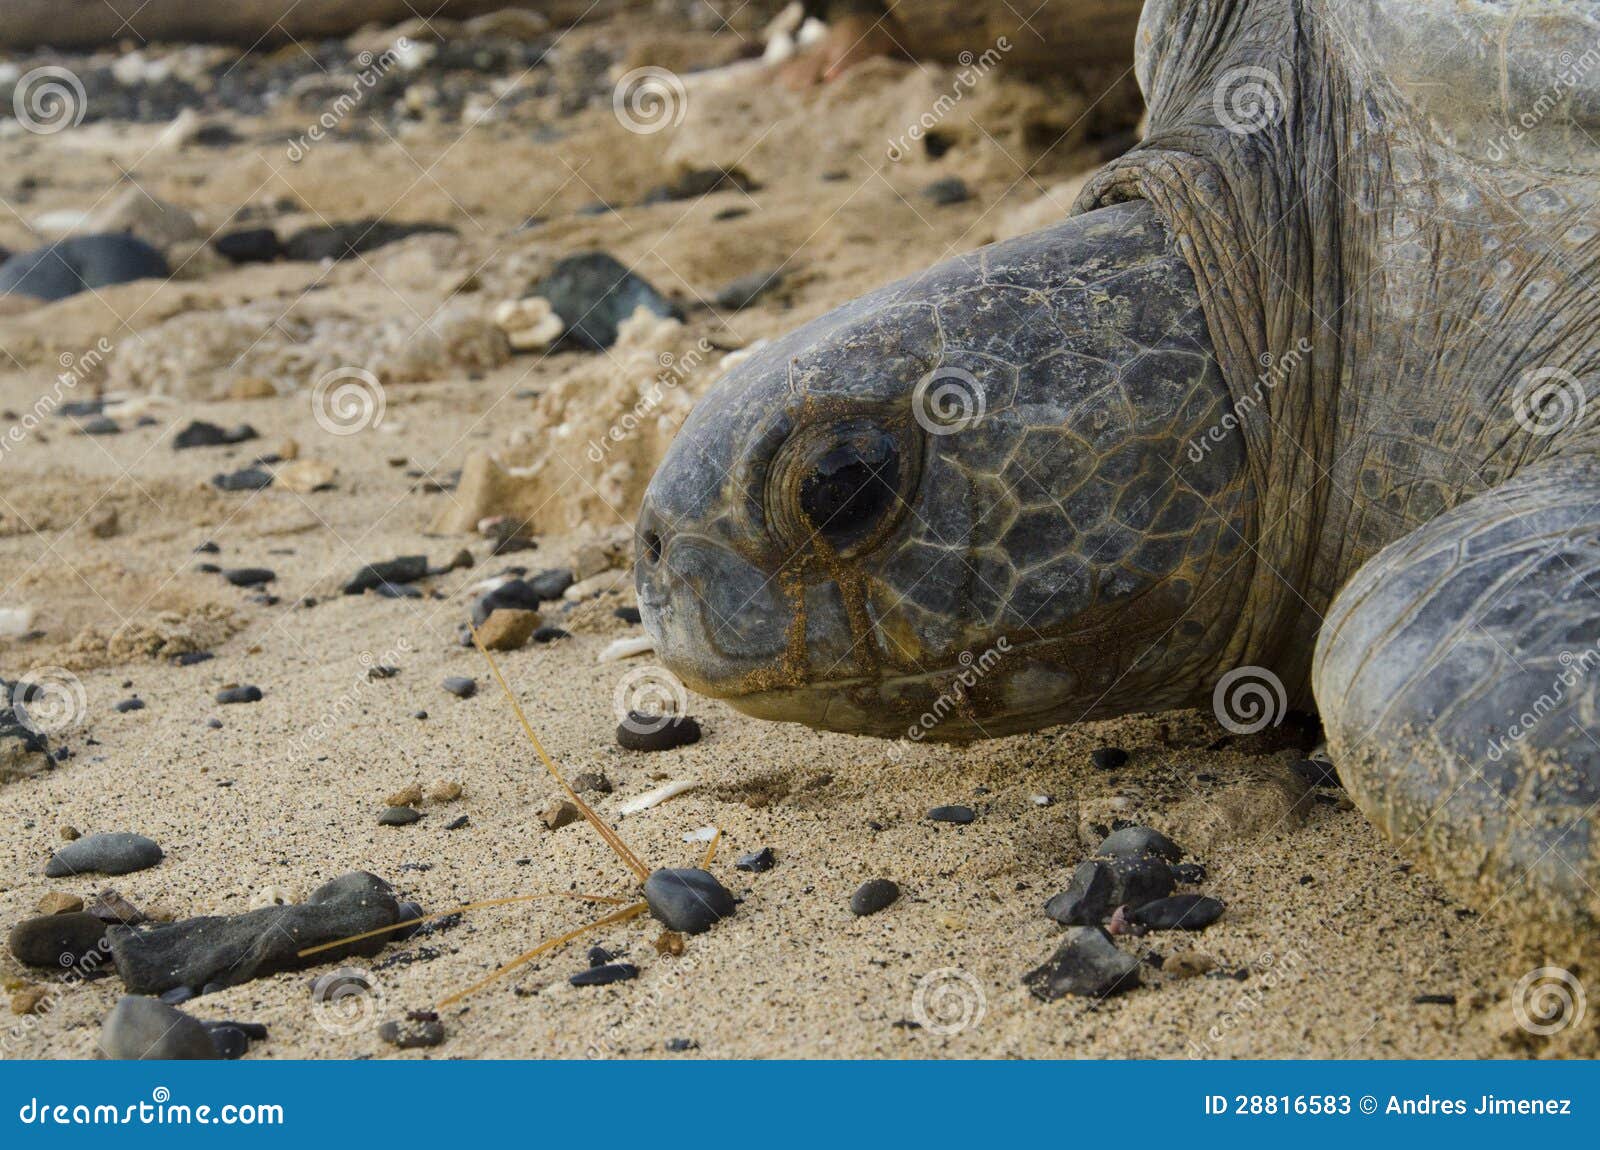 portrait of pacific green sea turtle in deserted beach